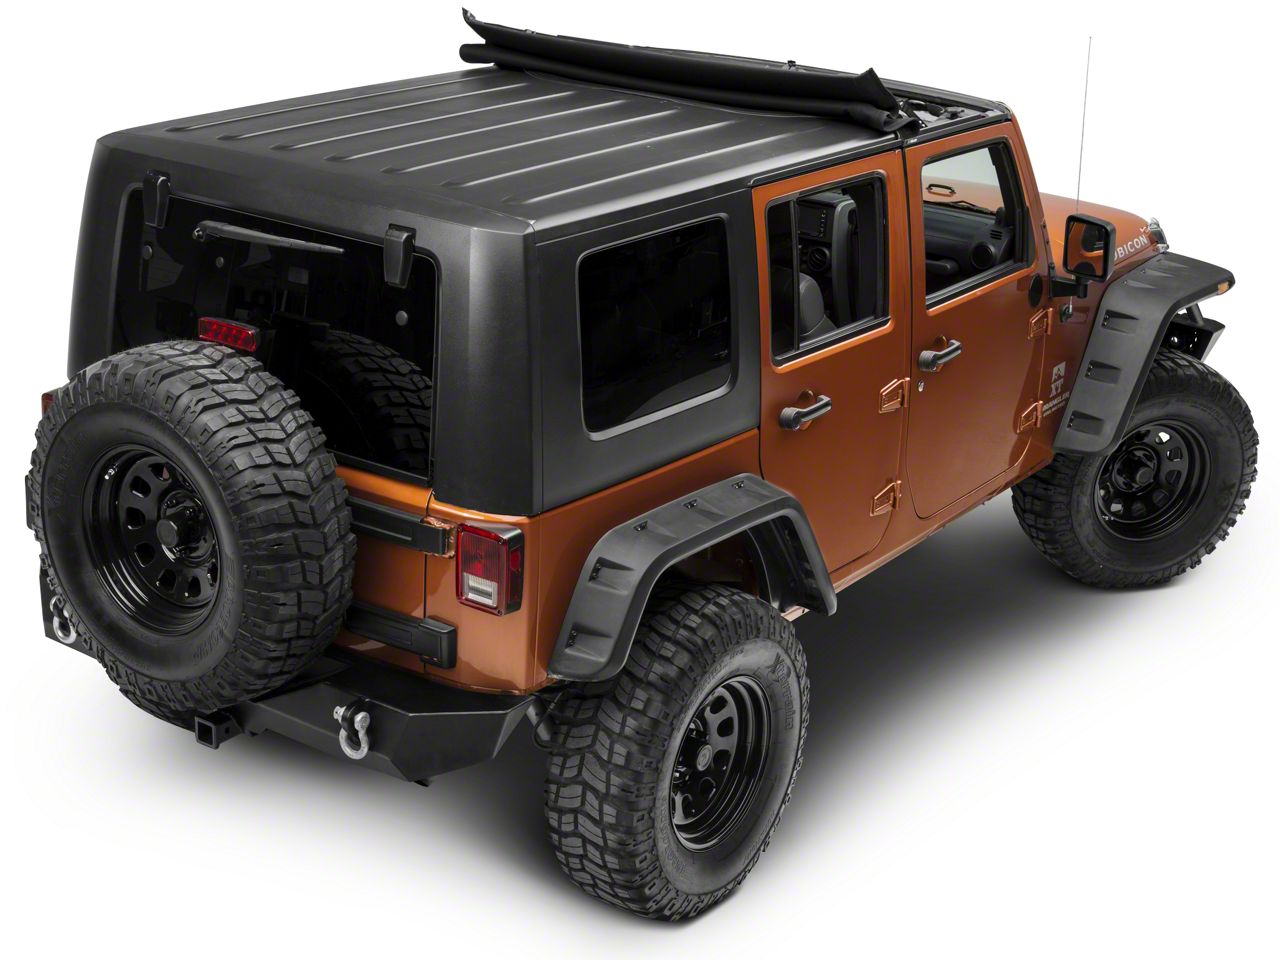 Bestop Jeep Wrangler Sunrider for Hardtop - Black Twill 52450-17 